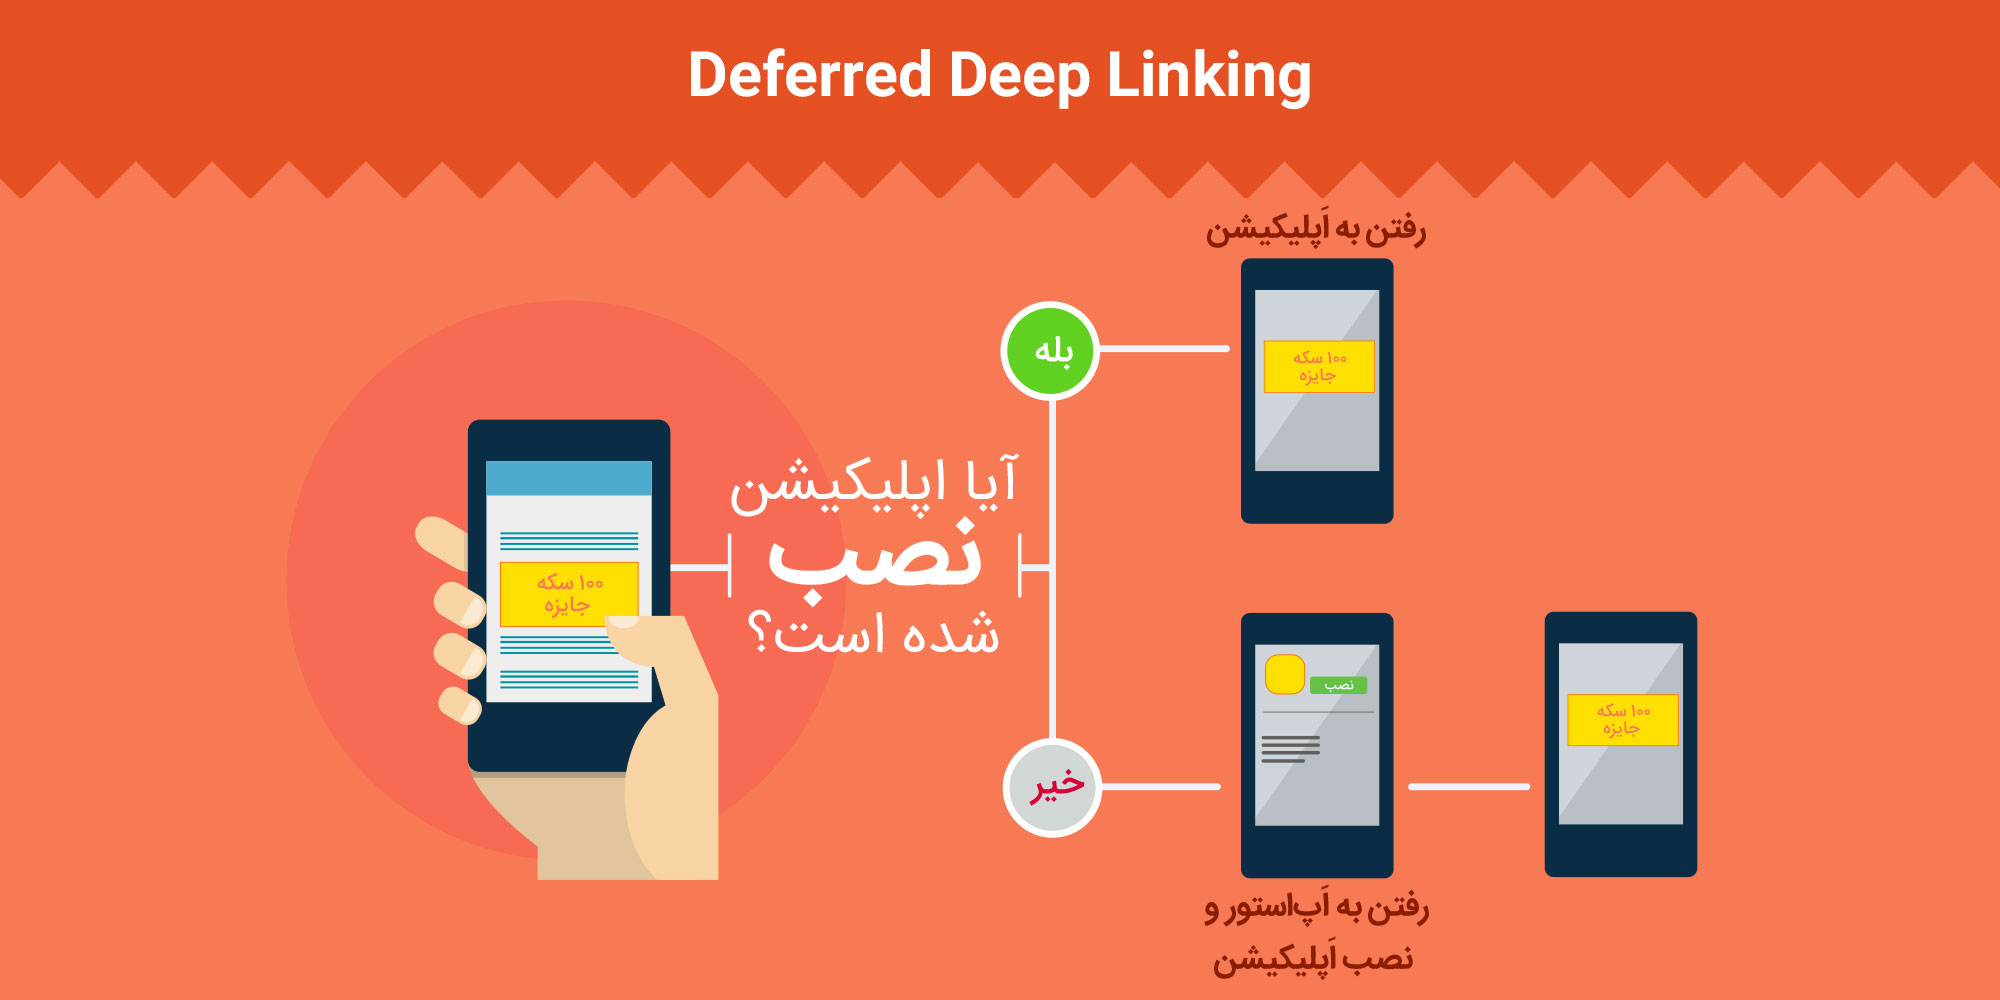 Deferred Deep linking